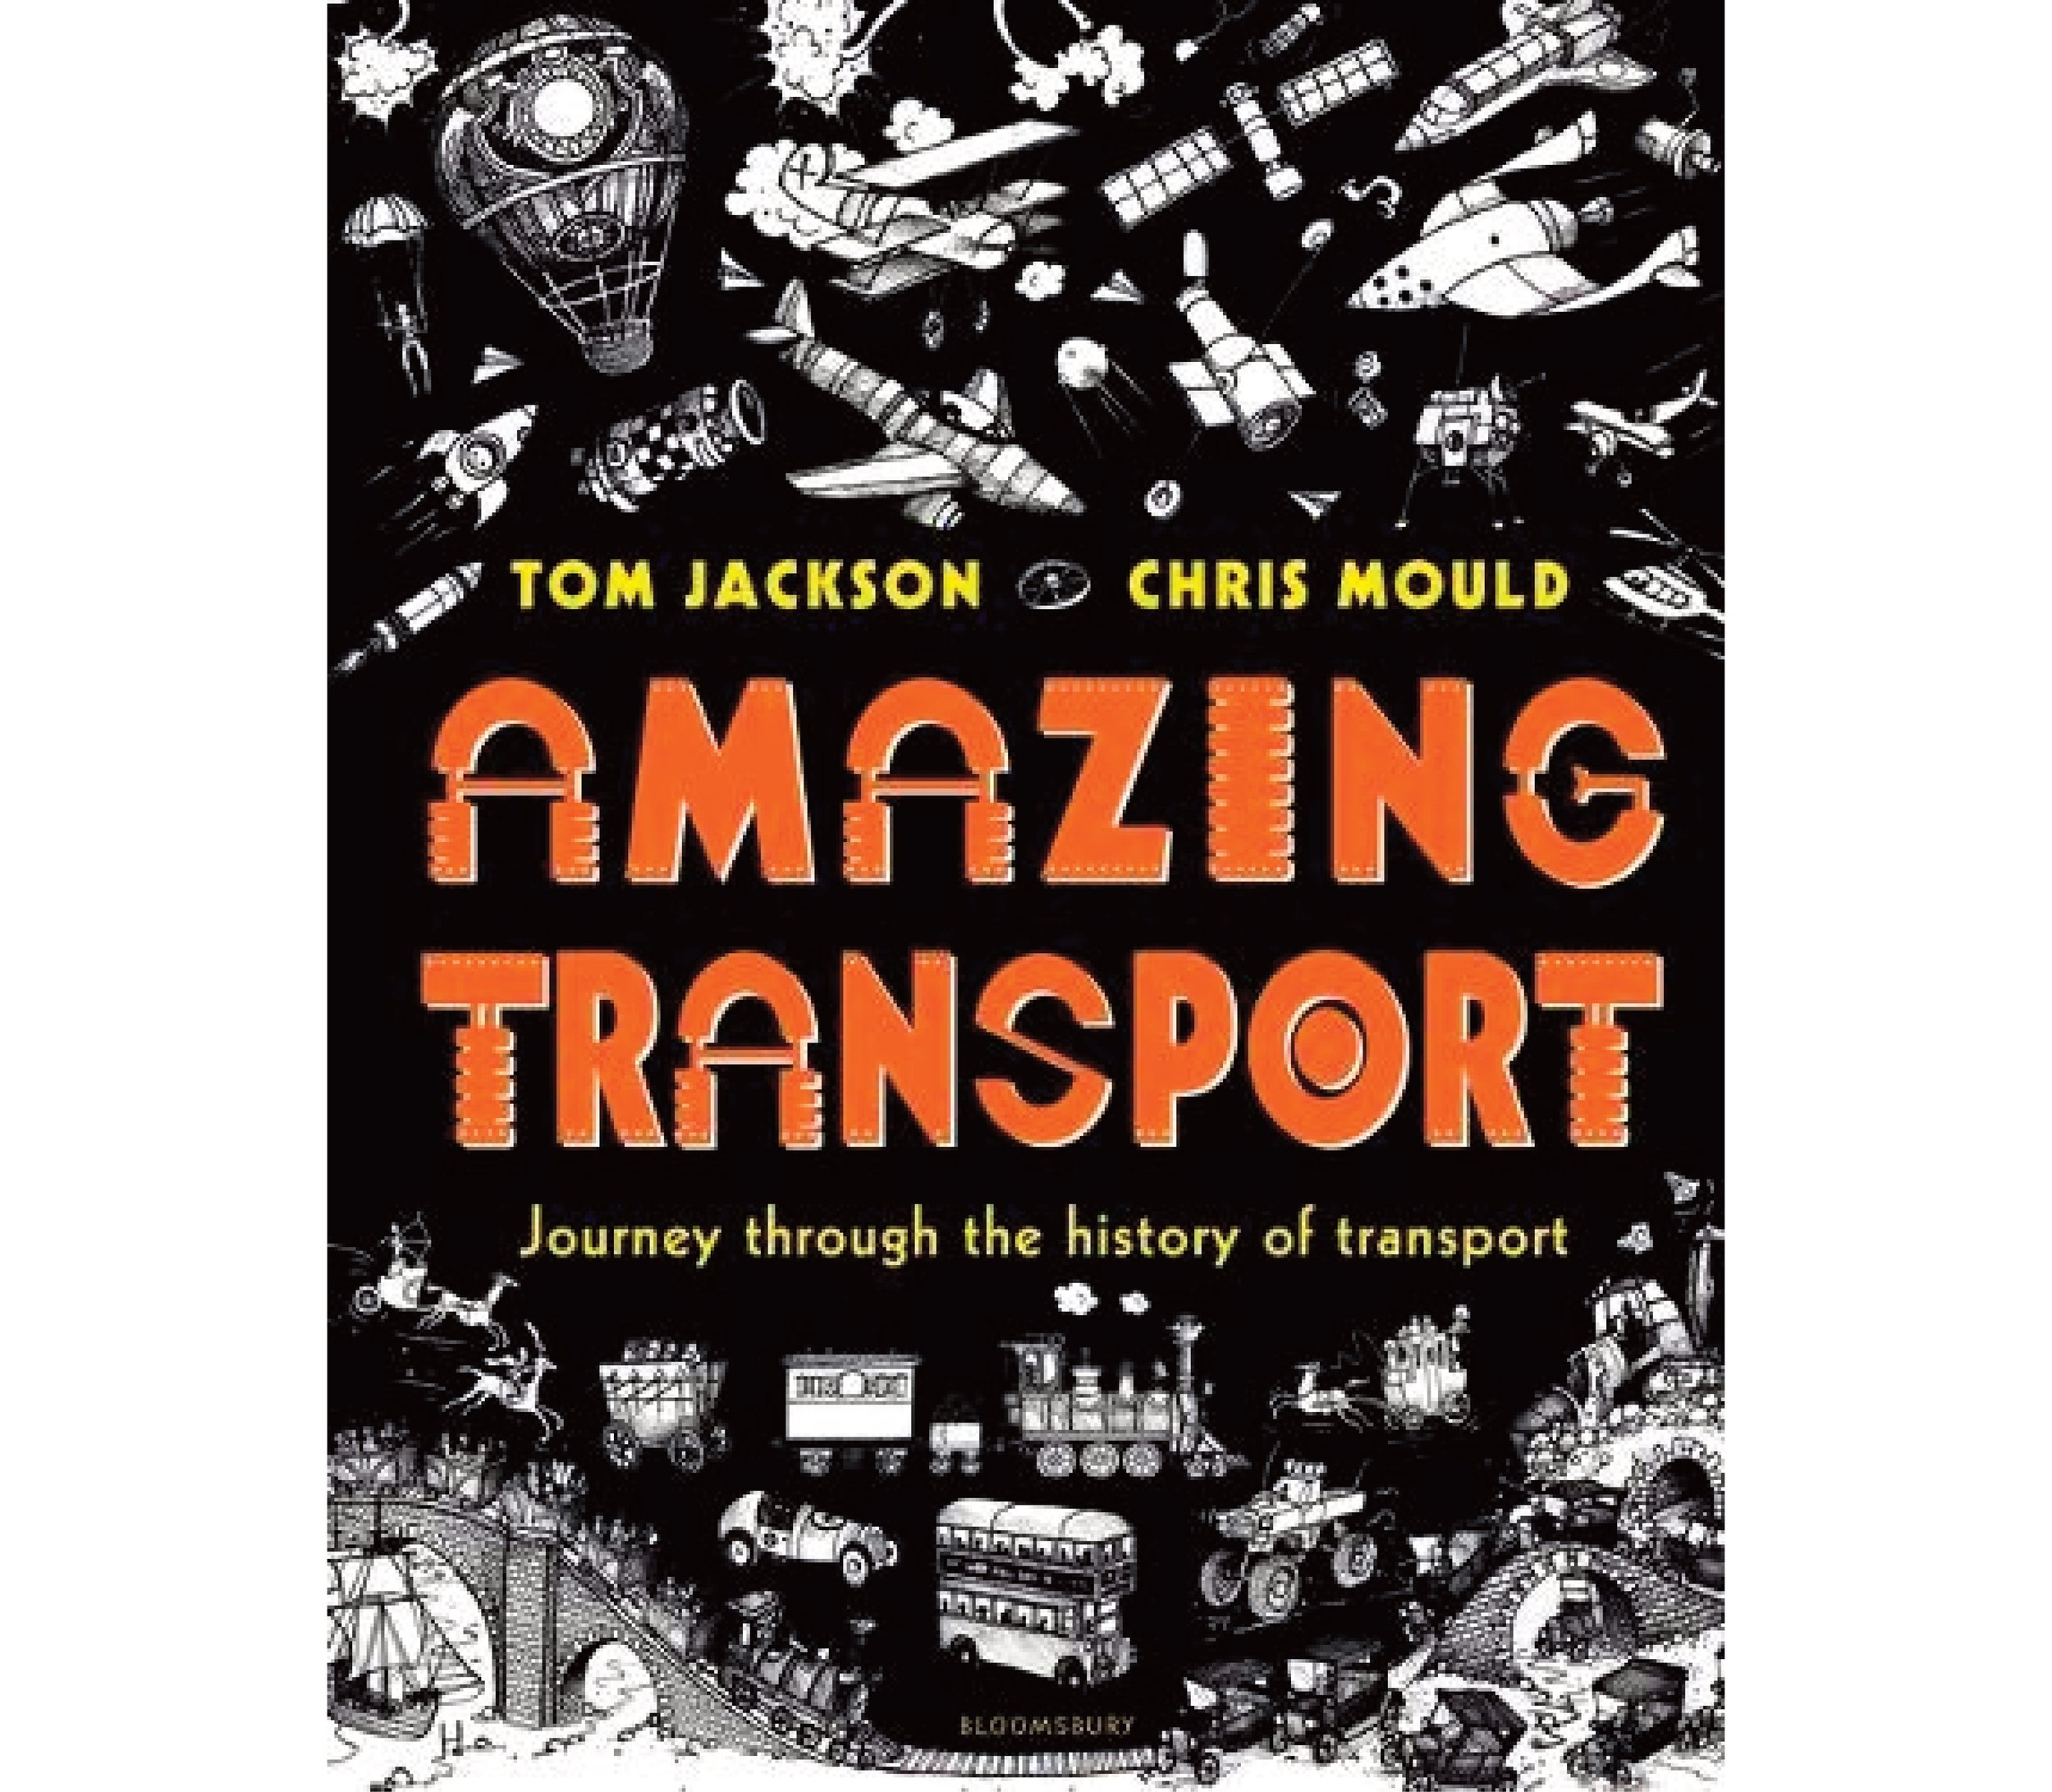 chris-mould-amazing-transport-cover-illustration.jpg